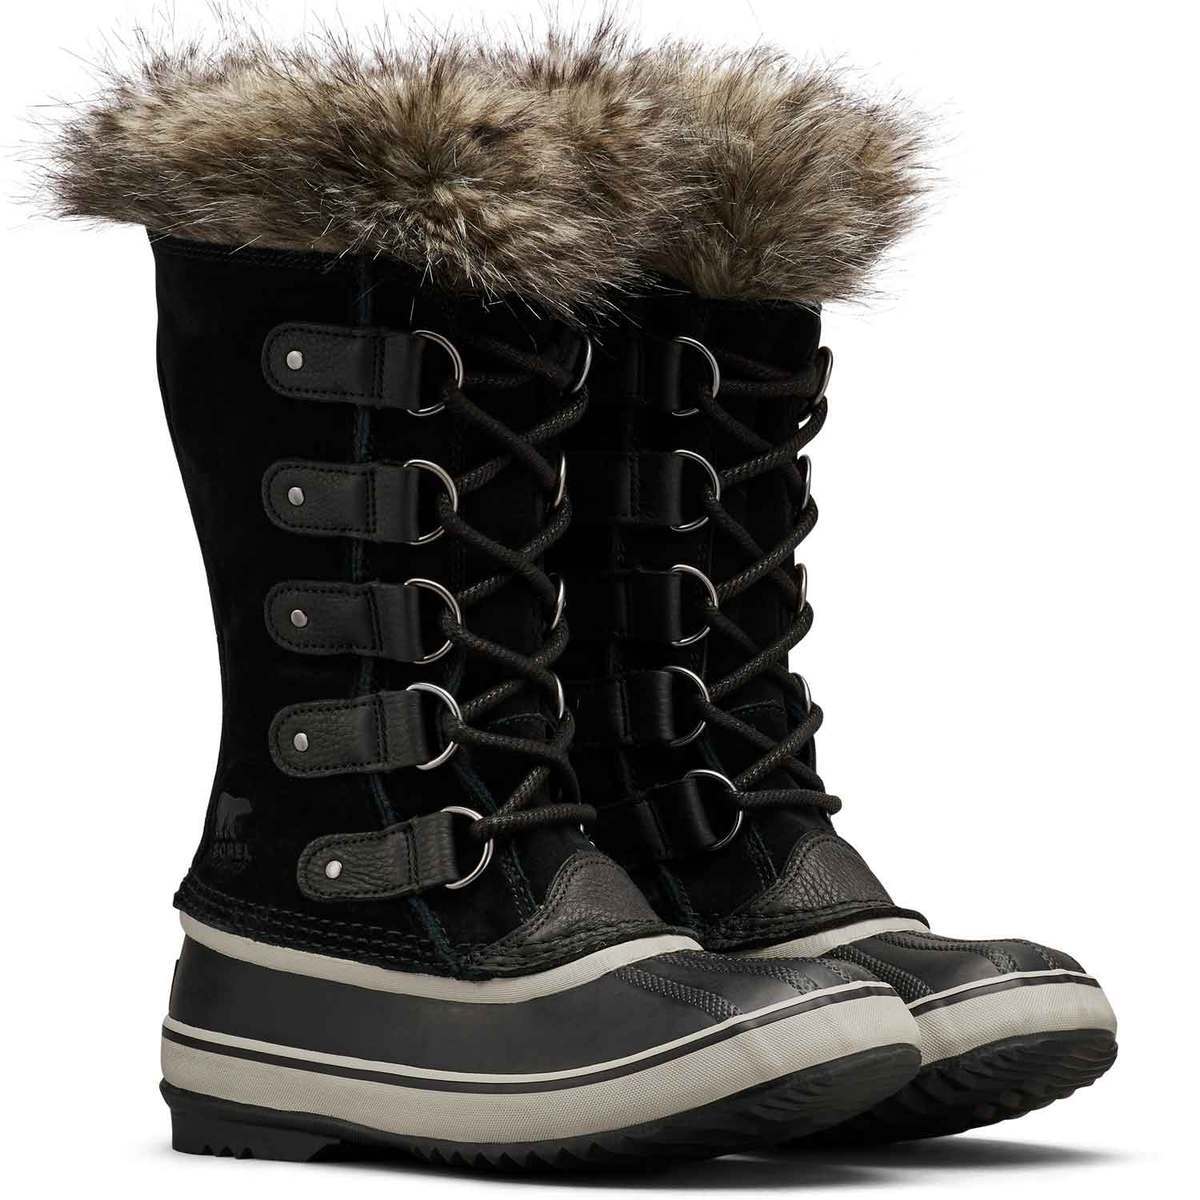 Sorel Women's Joan Of Arctic Waterproof Winter Boots - Black - Size 8